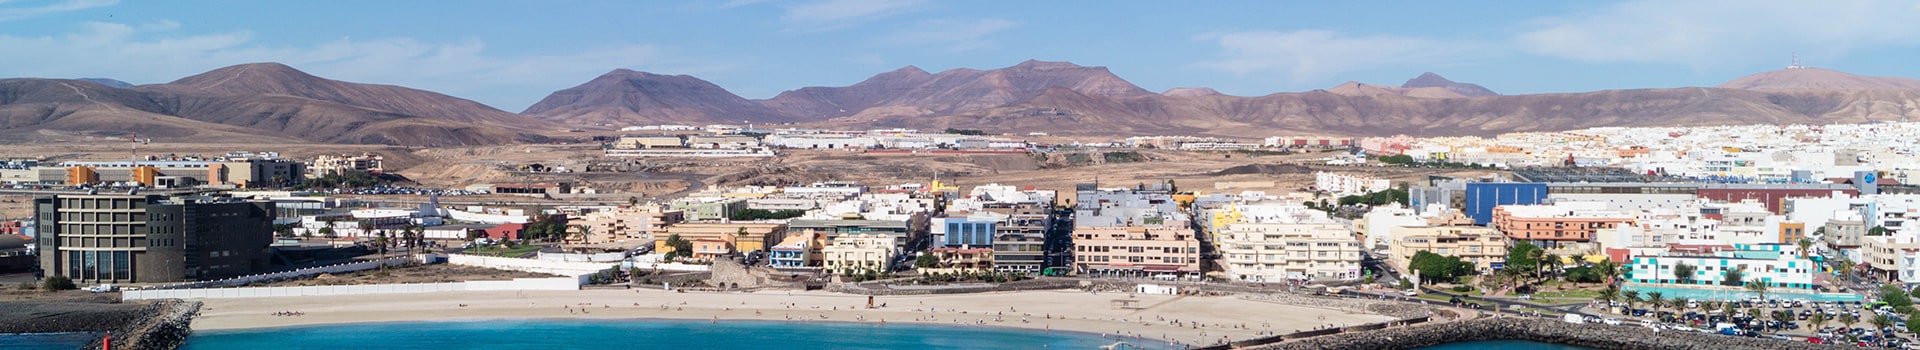 Séville - Fuerteventura